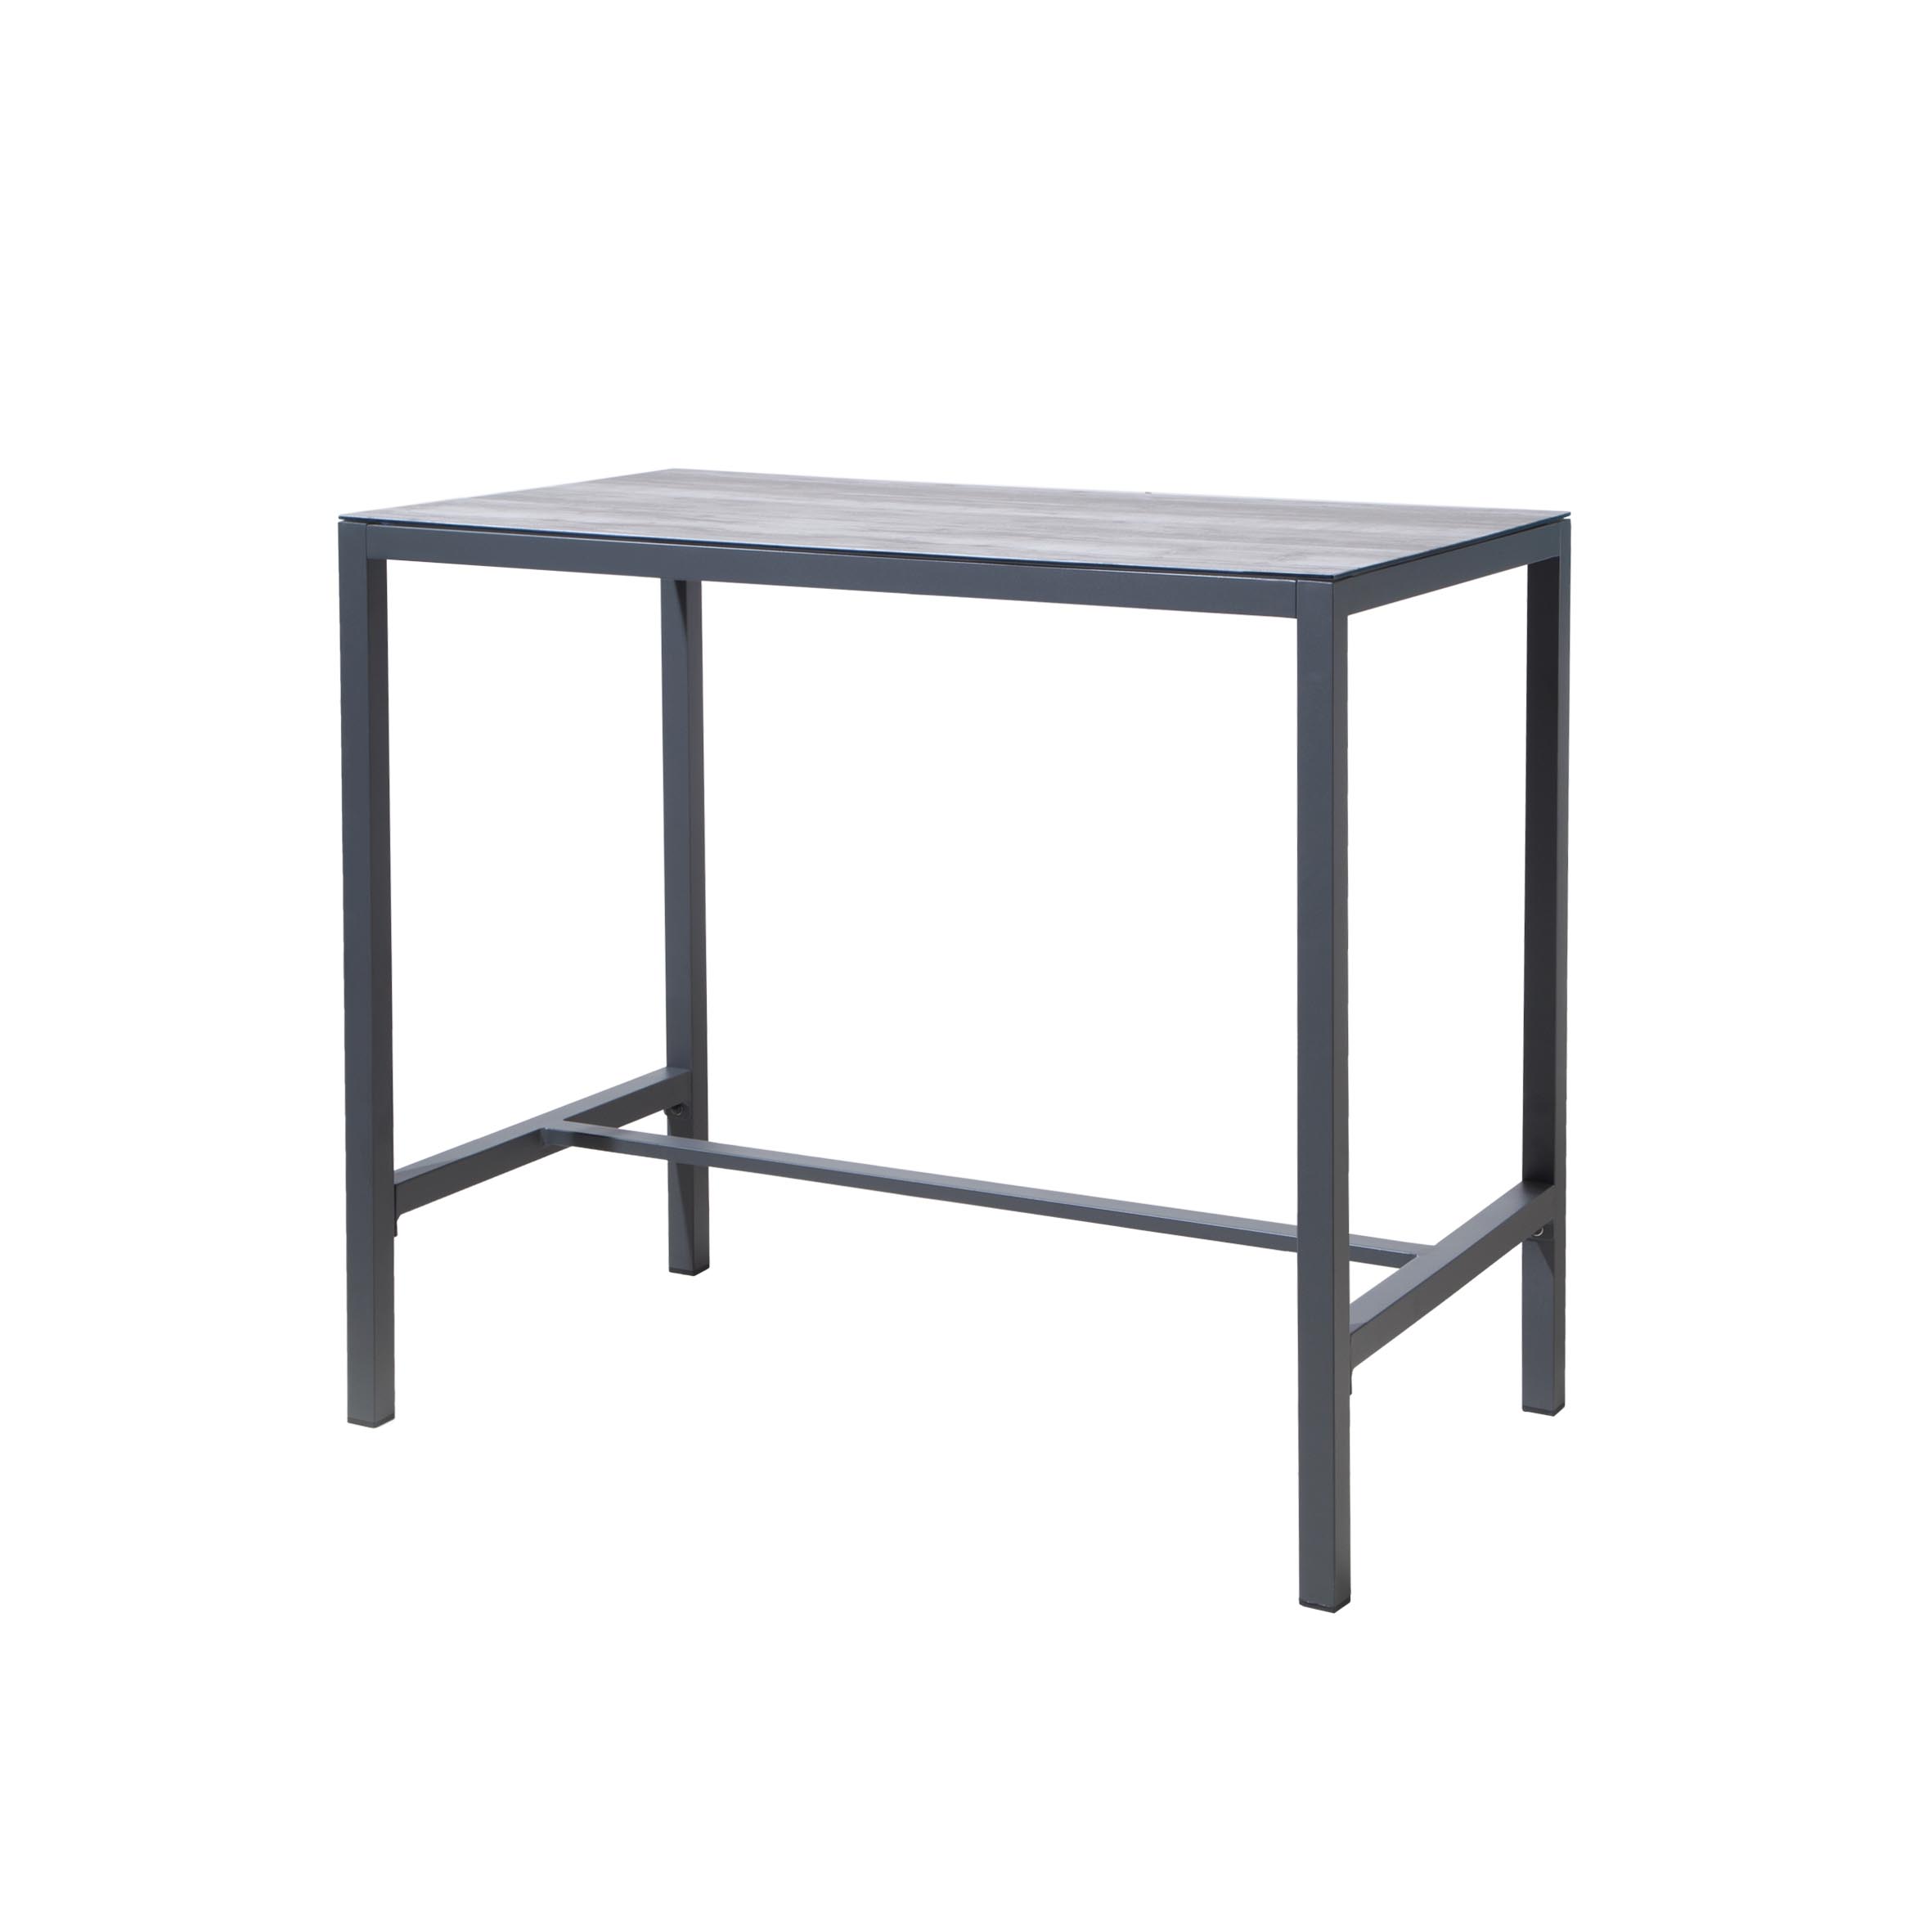 Season alu.bar table (Ceramic table) S1